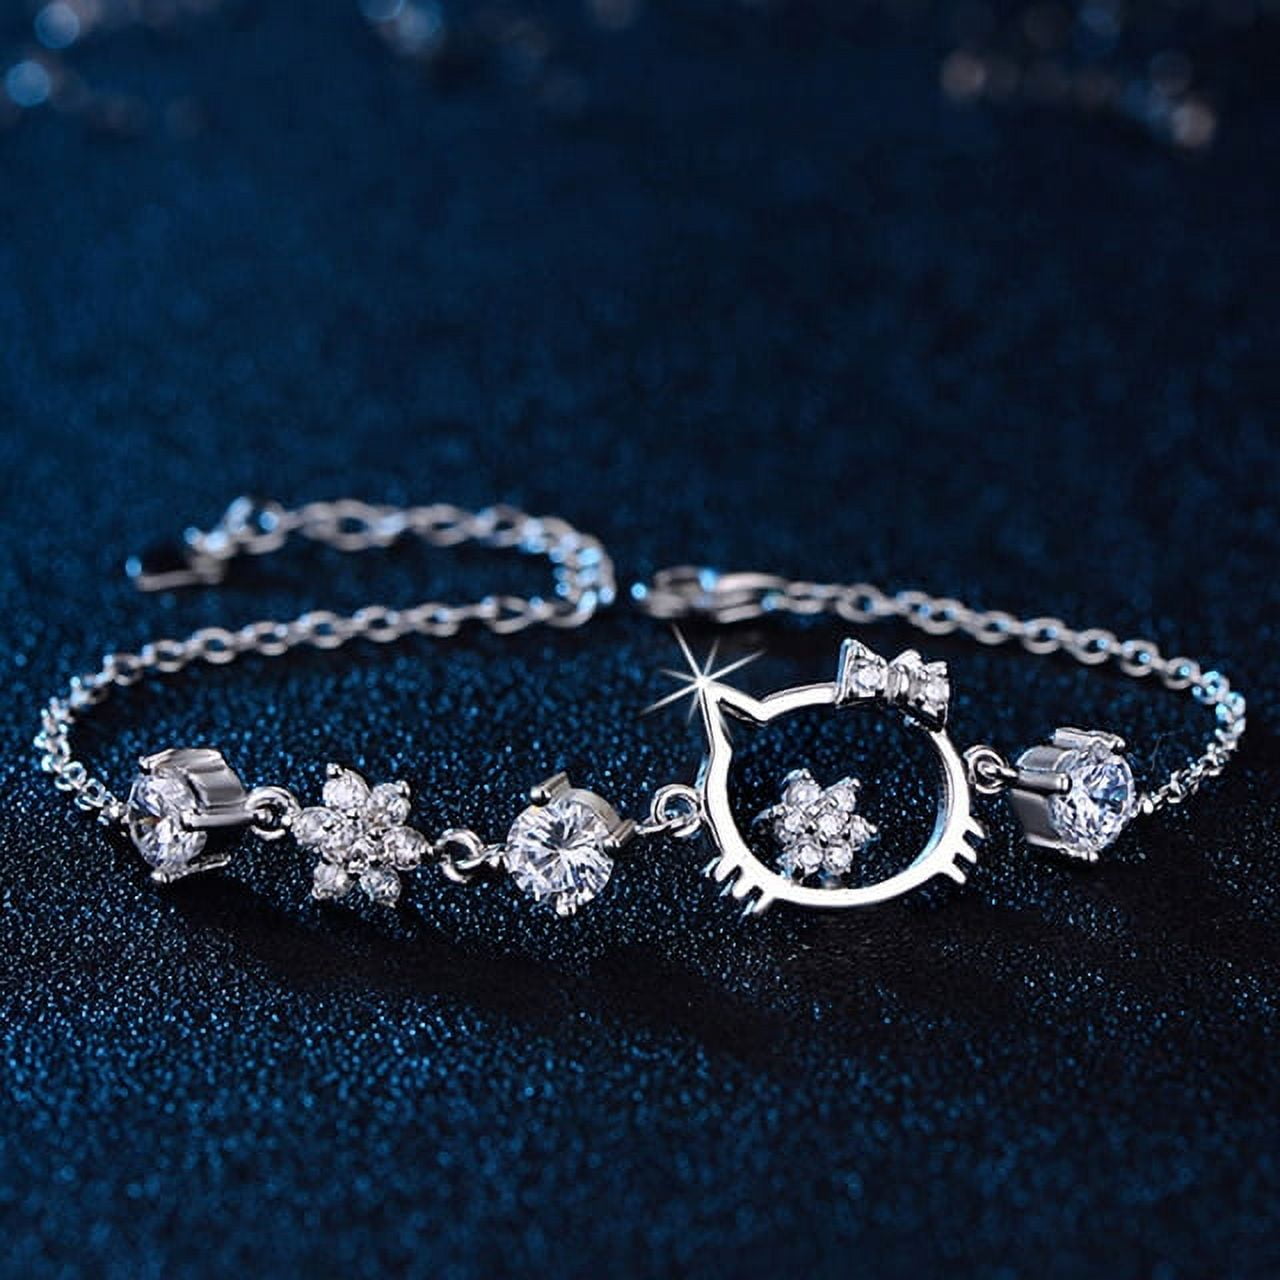 Sanrio Hello Kitty Bracelet Creative Kawaii Tassel Pendant Jewelry Beads  Exquisite Accessories Fashion Bracelet Girlfriend Gift